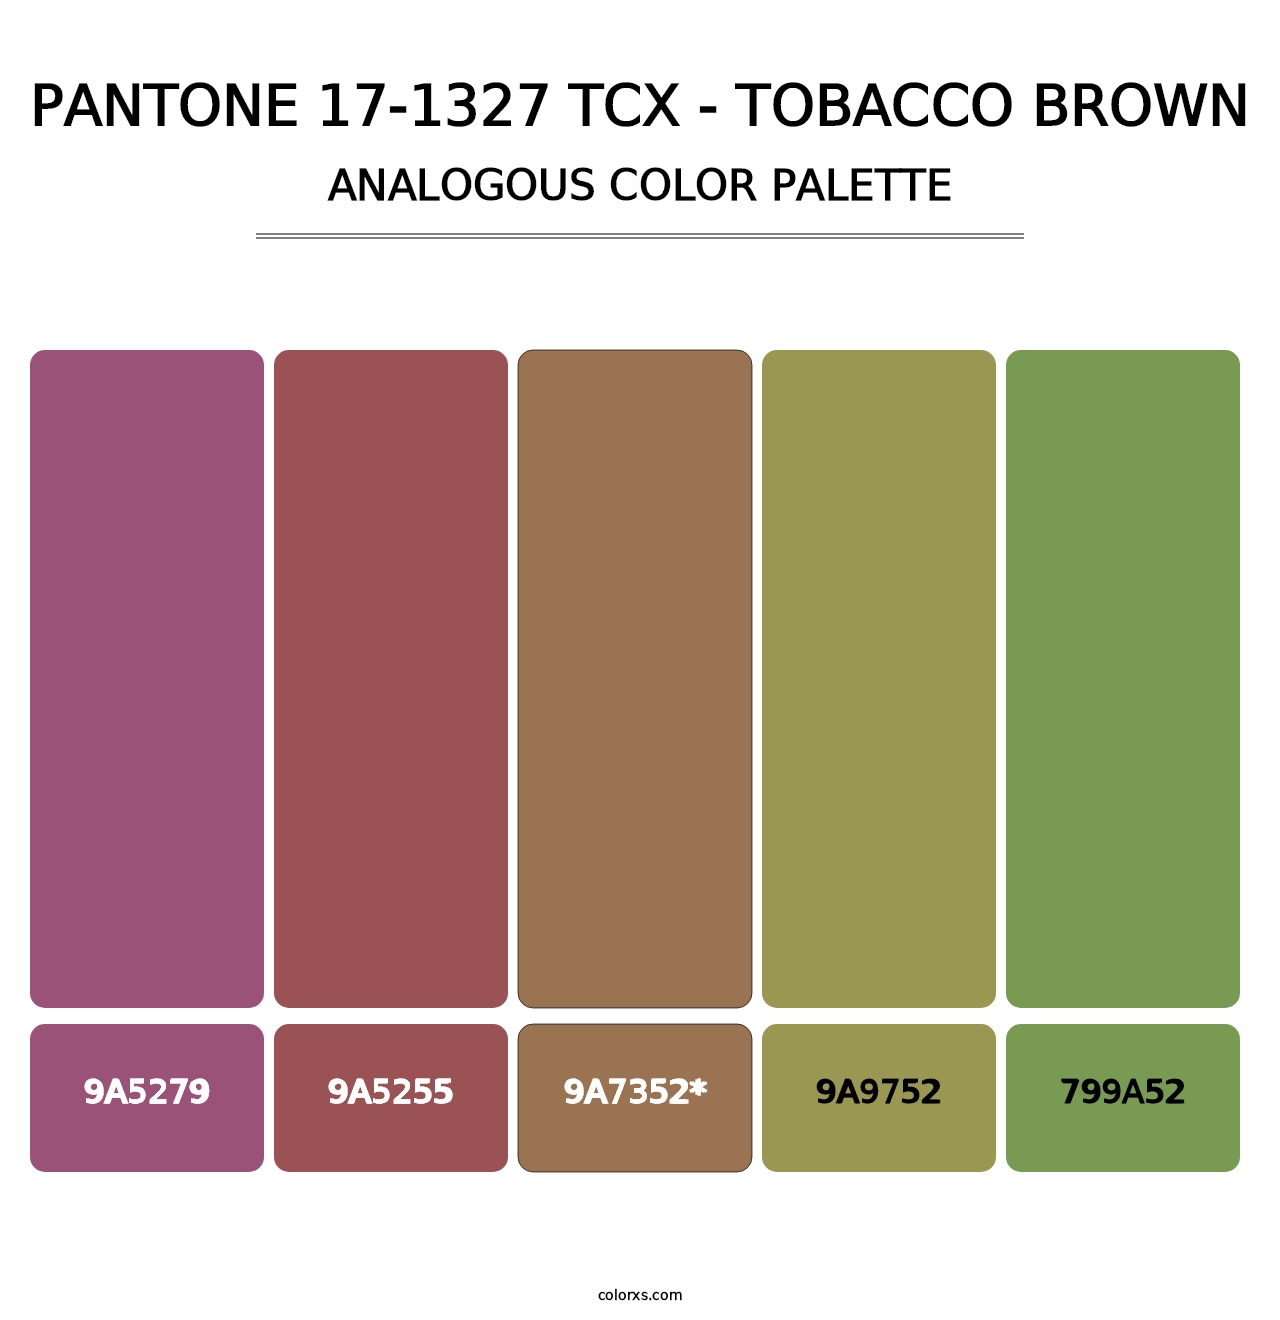 PANTONE 17-1327 TCX - Tobacco Brown - Analogous Color Palette